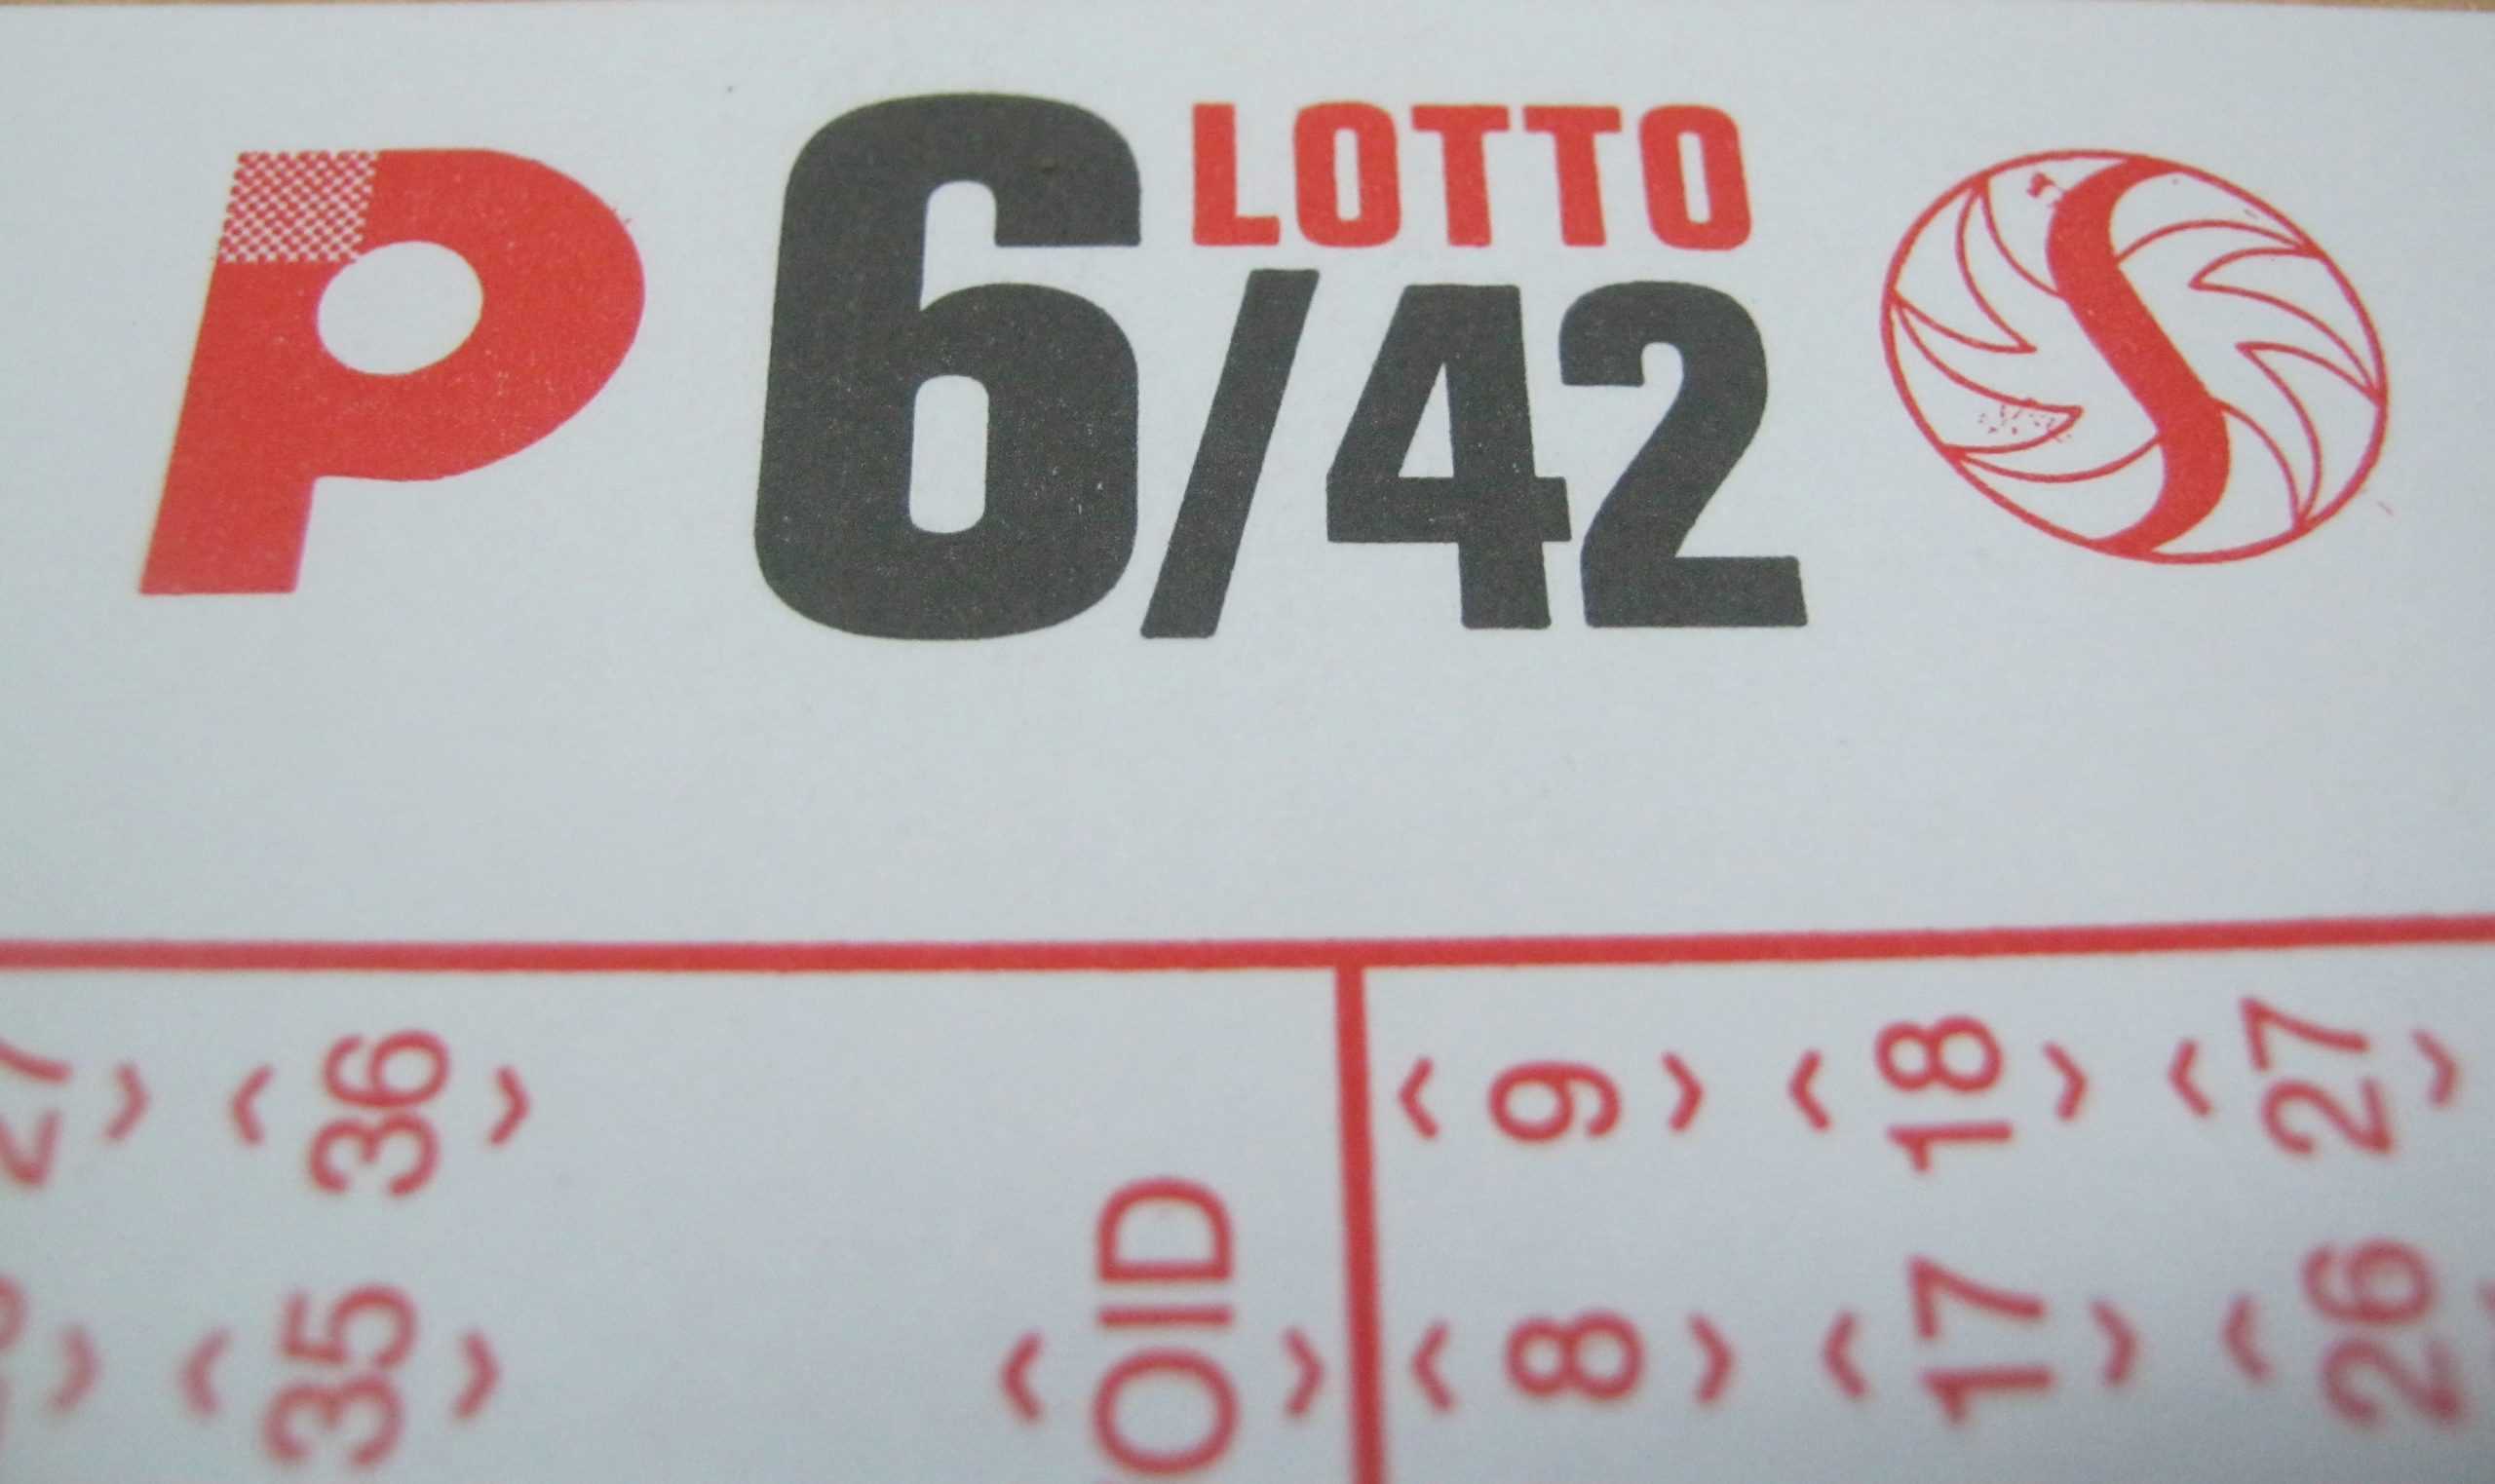 Bohol sole bettor wins P18.6 Million in 6/42 Lotto - PCSO